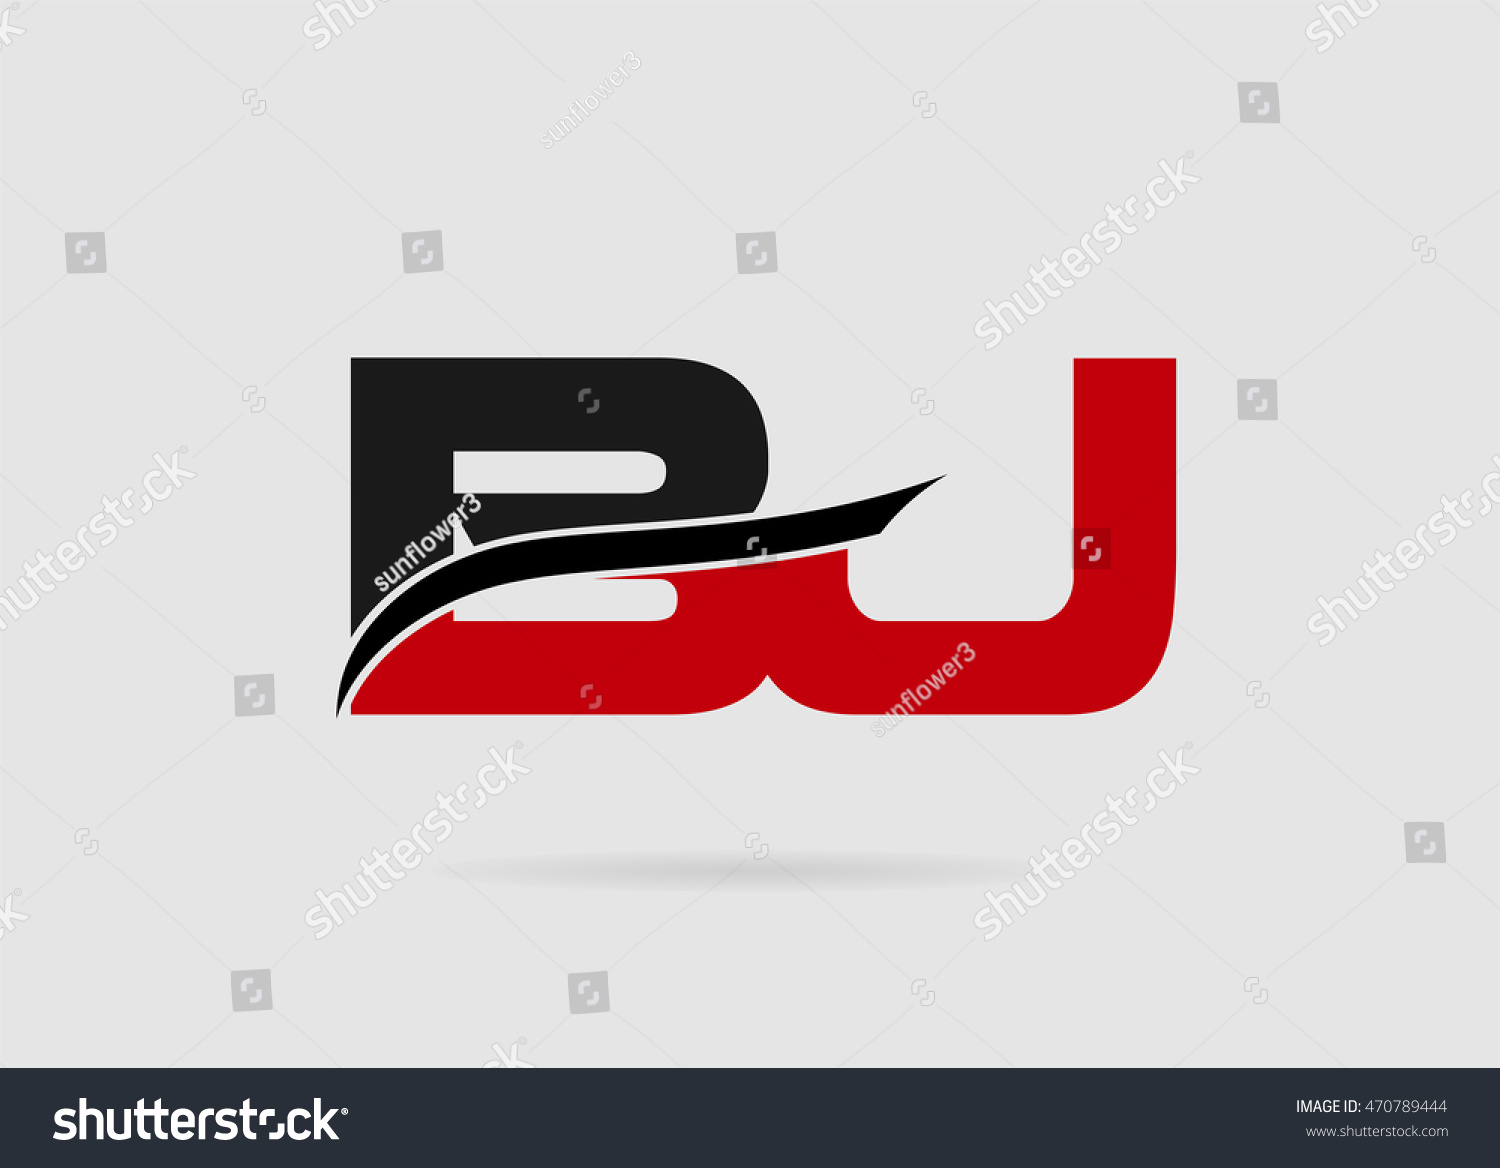 Bj Company Group Linked Letter Logo Stock Vector Illustration 470789444 ...